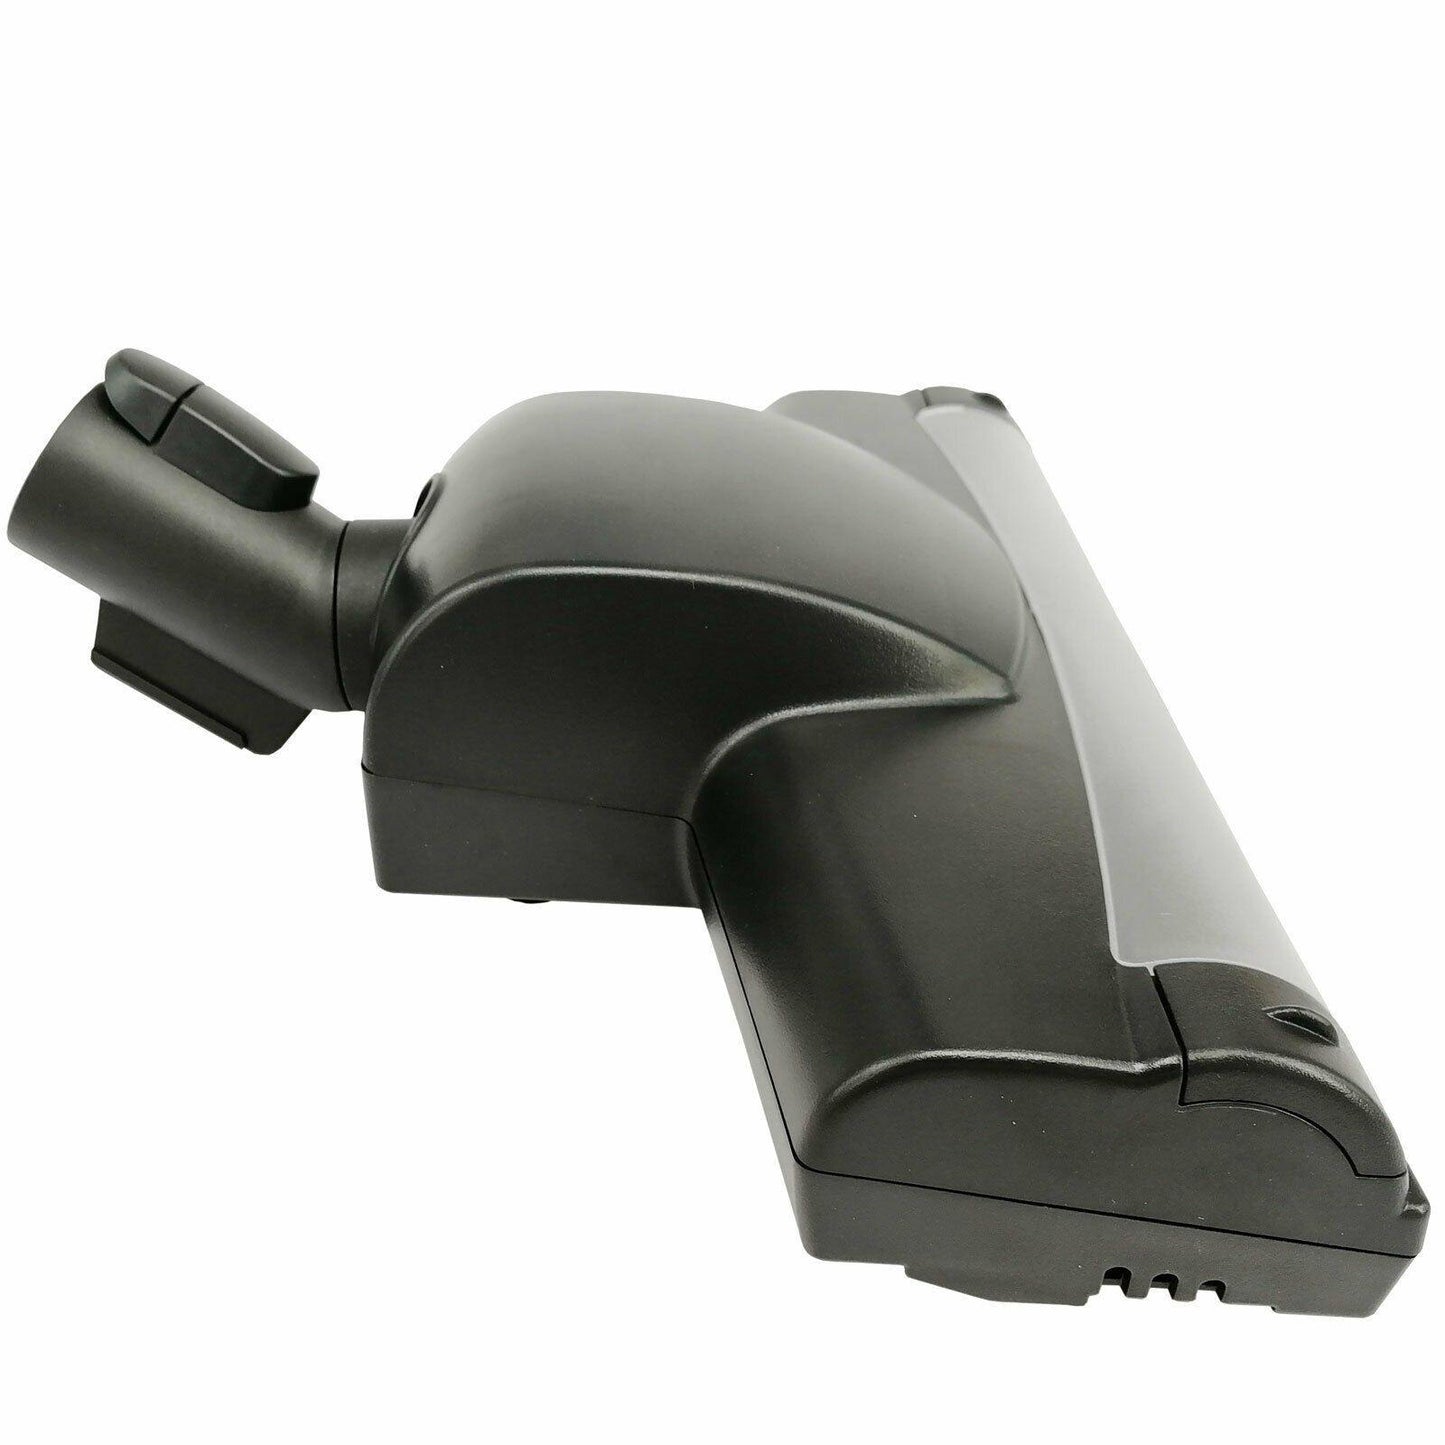 Vacuum Floor Turbo Brush Head For Miele STB205-3 7250040 S8000 S4000 S5000 S2000 Sparesbarn